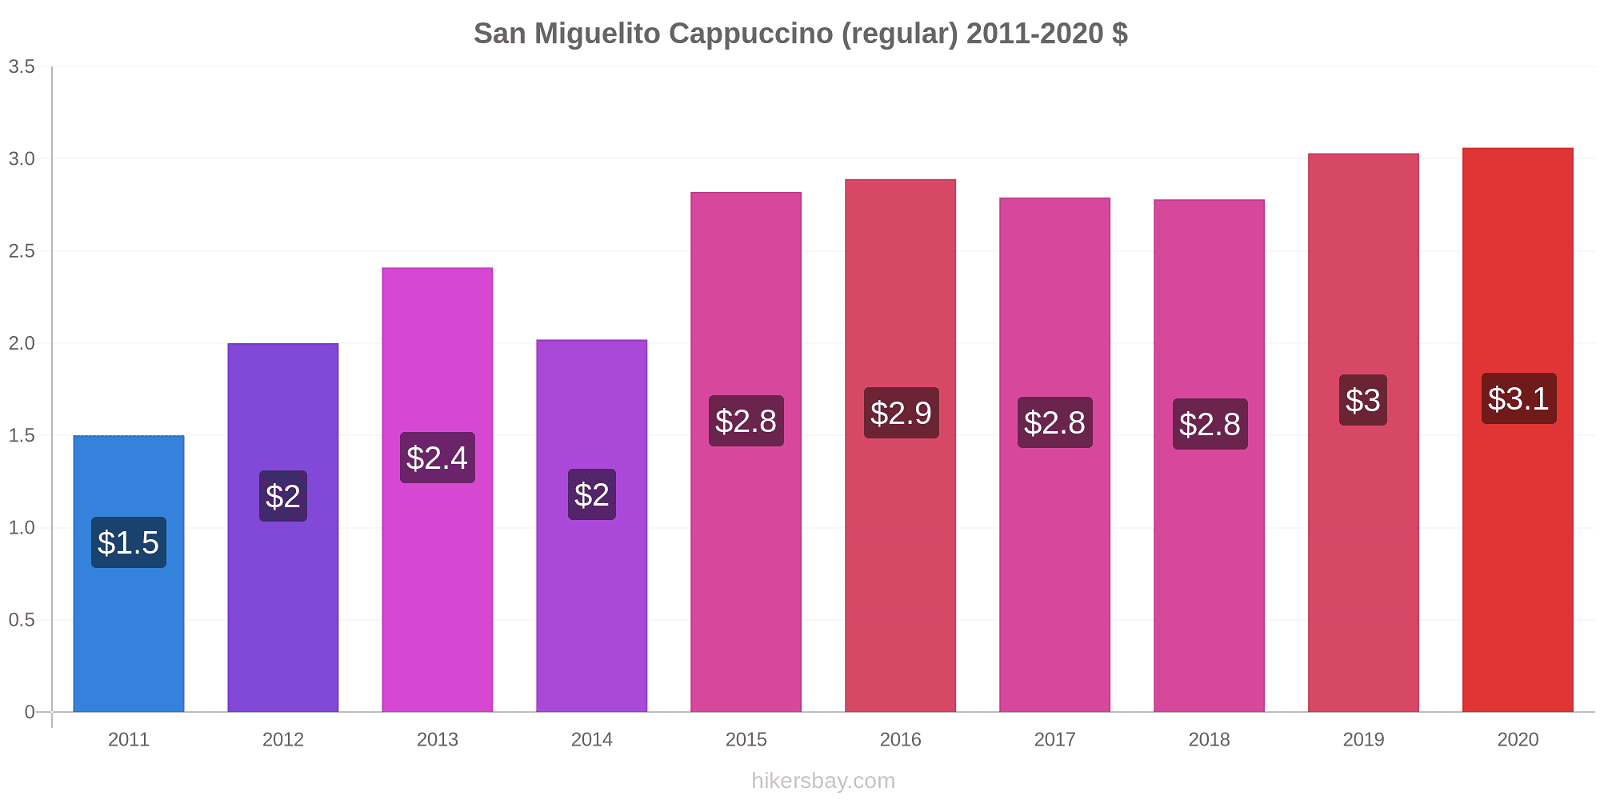 San Miguelito price changes Cappuccino (regular) hikersbay.com